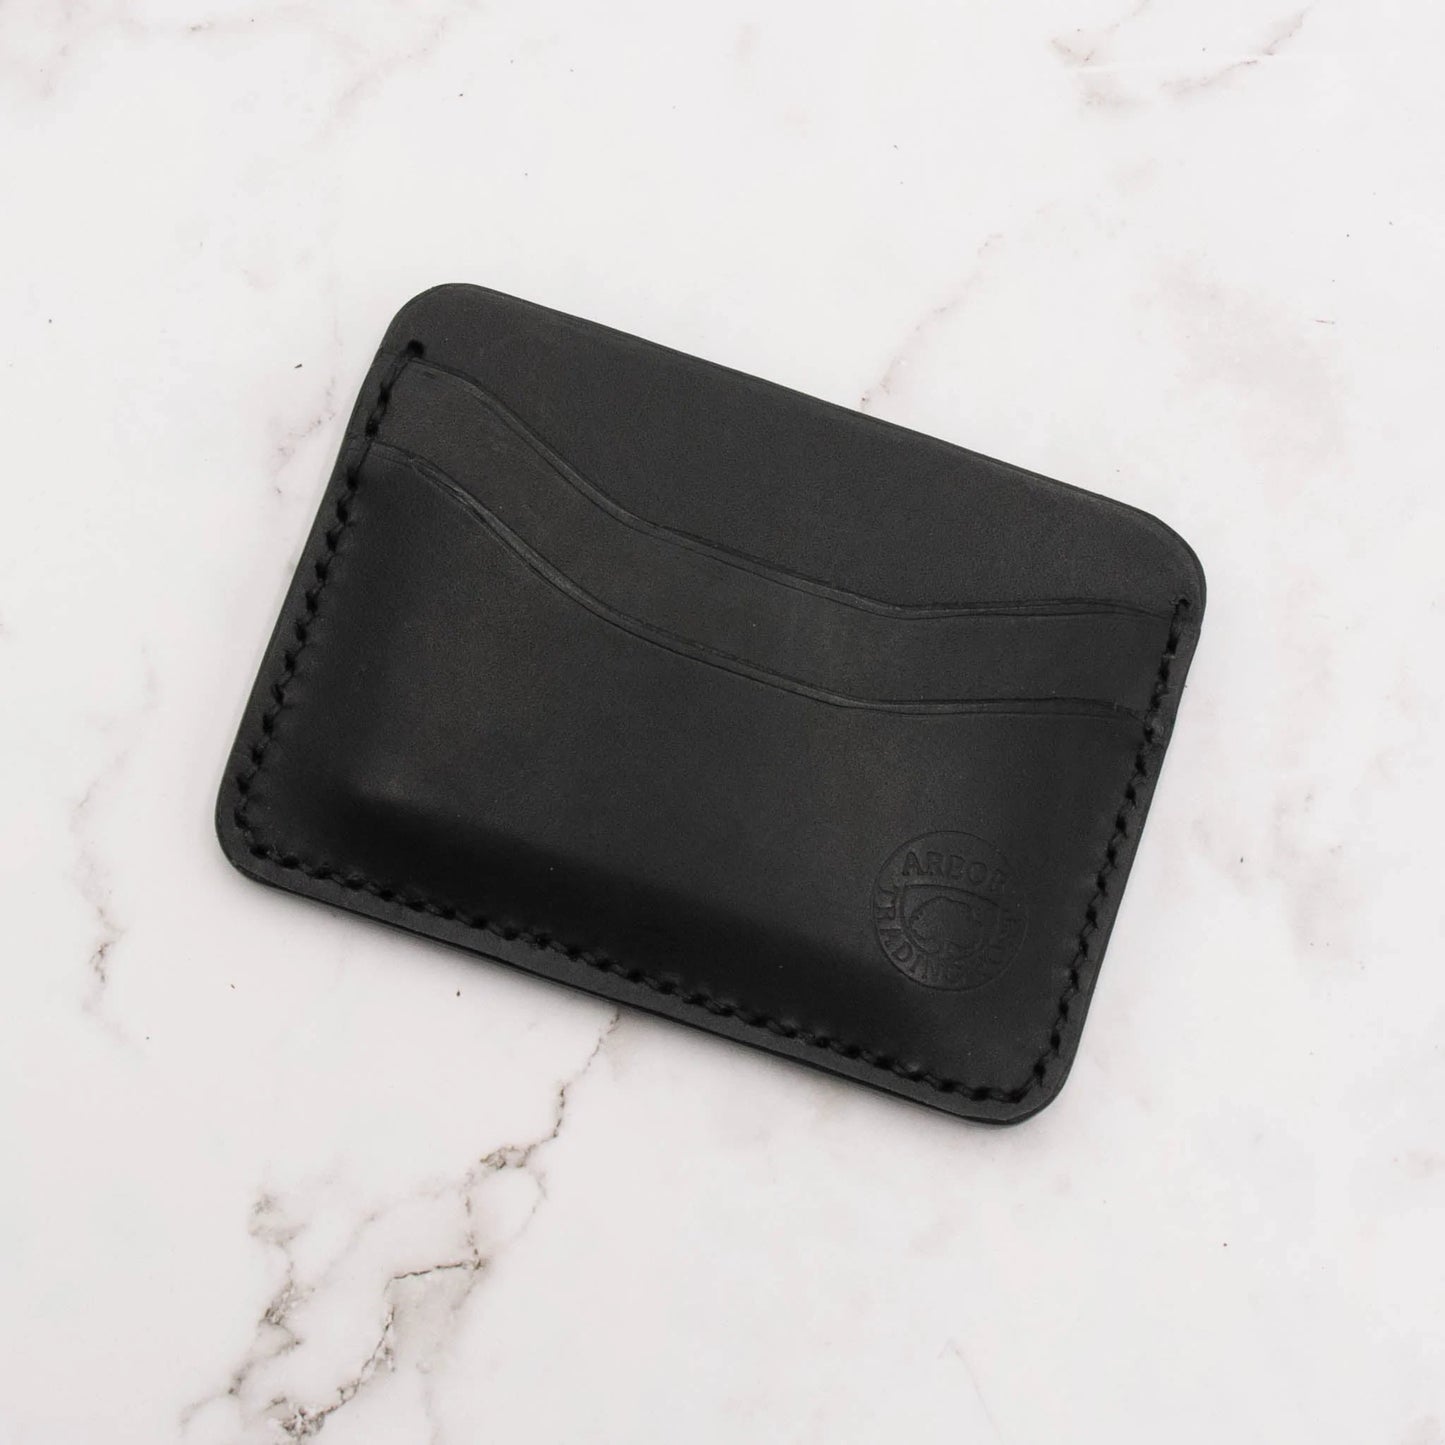 Arbor Trading Post Slim Card Holder Wallet Handcrafted Leather 5-Pocket Slim Card Holder Wallet